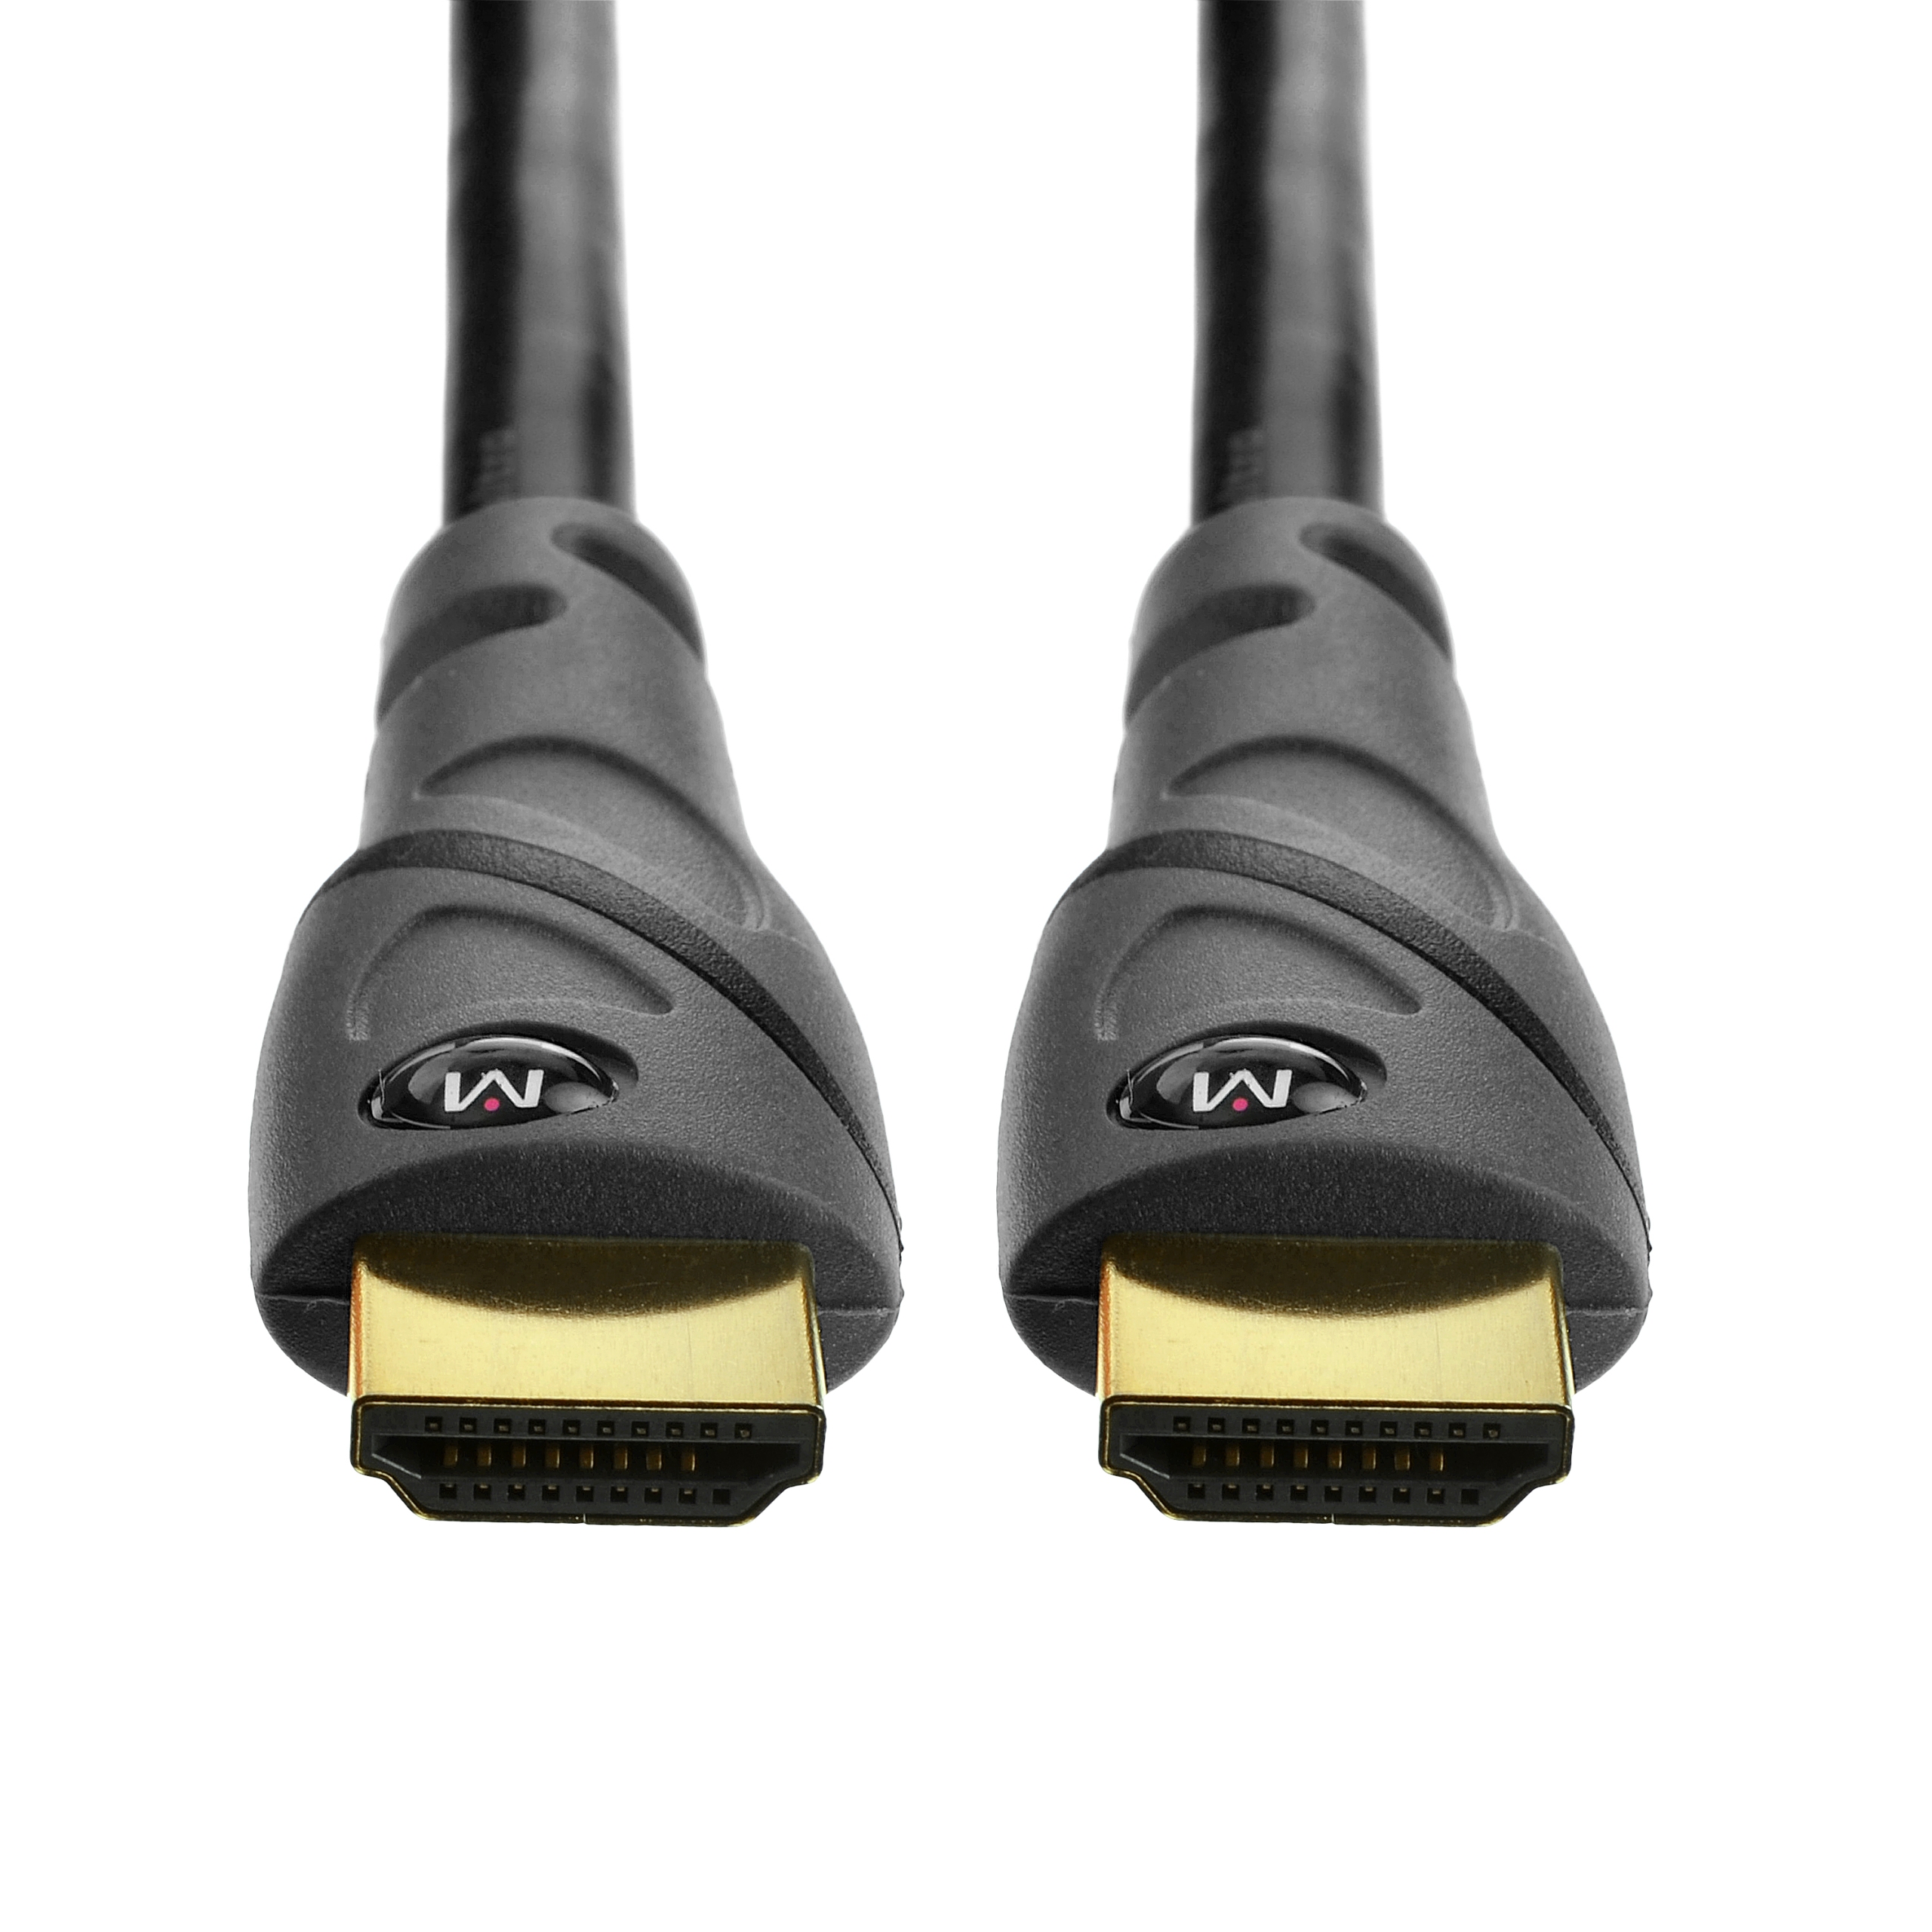 Cable HDMI 4 m EVL